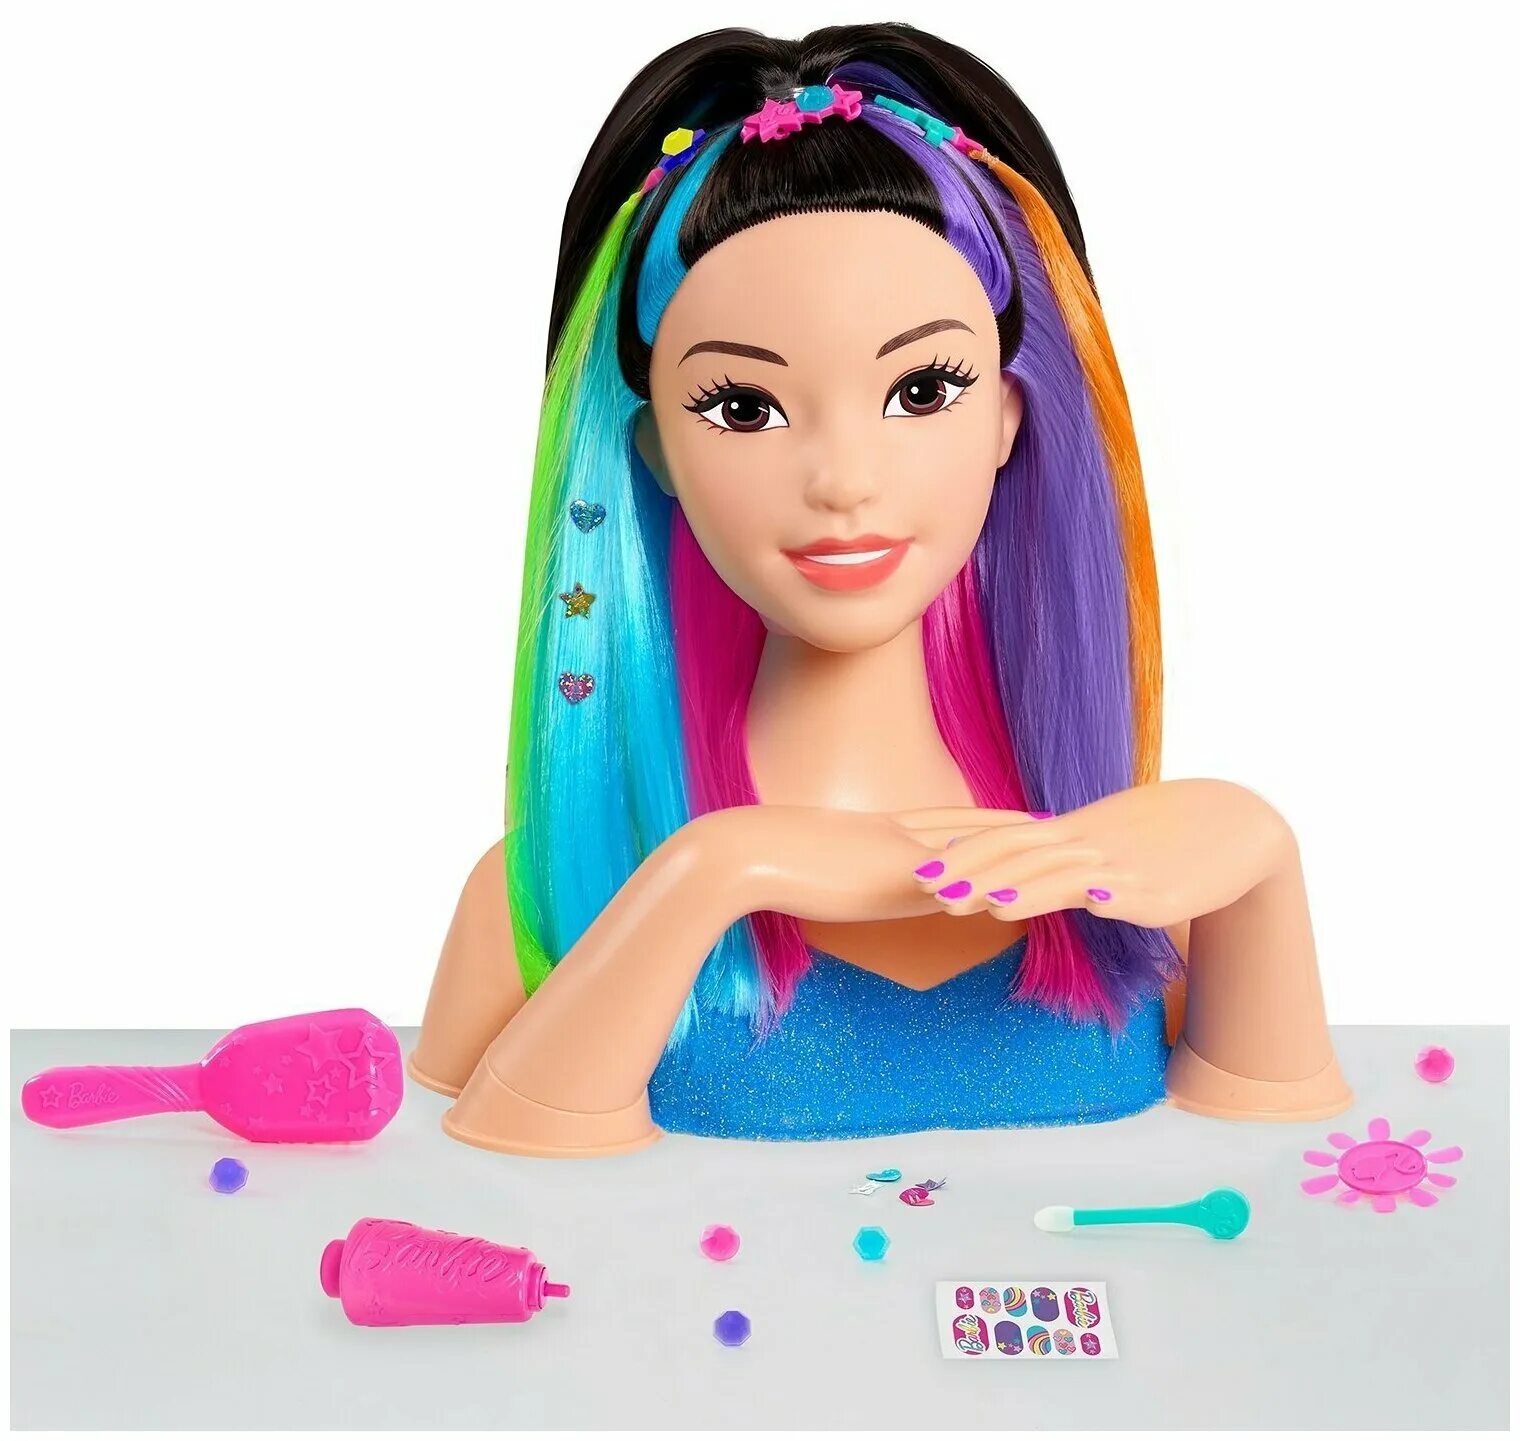 Кукла прически купить. Кукла-торс Barbie Дримтопия, 62625. Кукла Барби Хэир Делюкс. Барби Rainbow Sparkle hair. Кукла Барби стайл Делюкс.